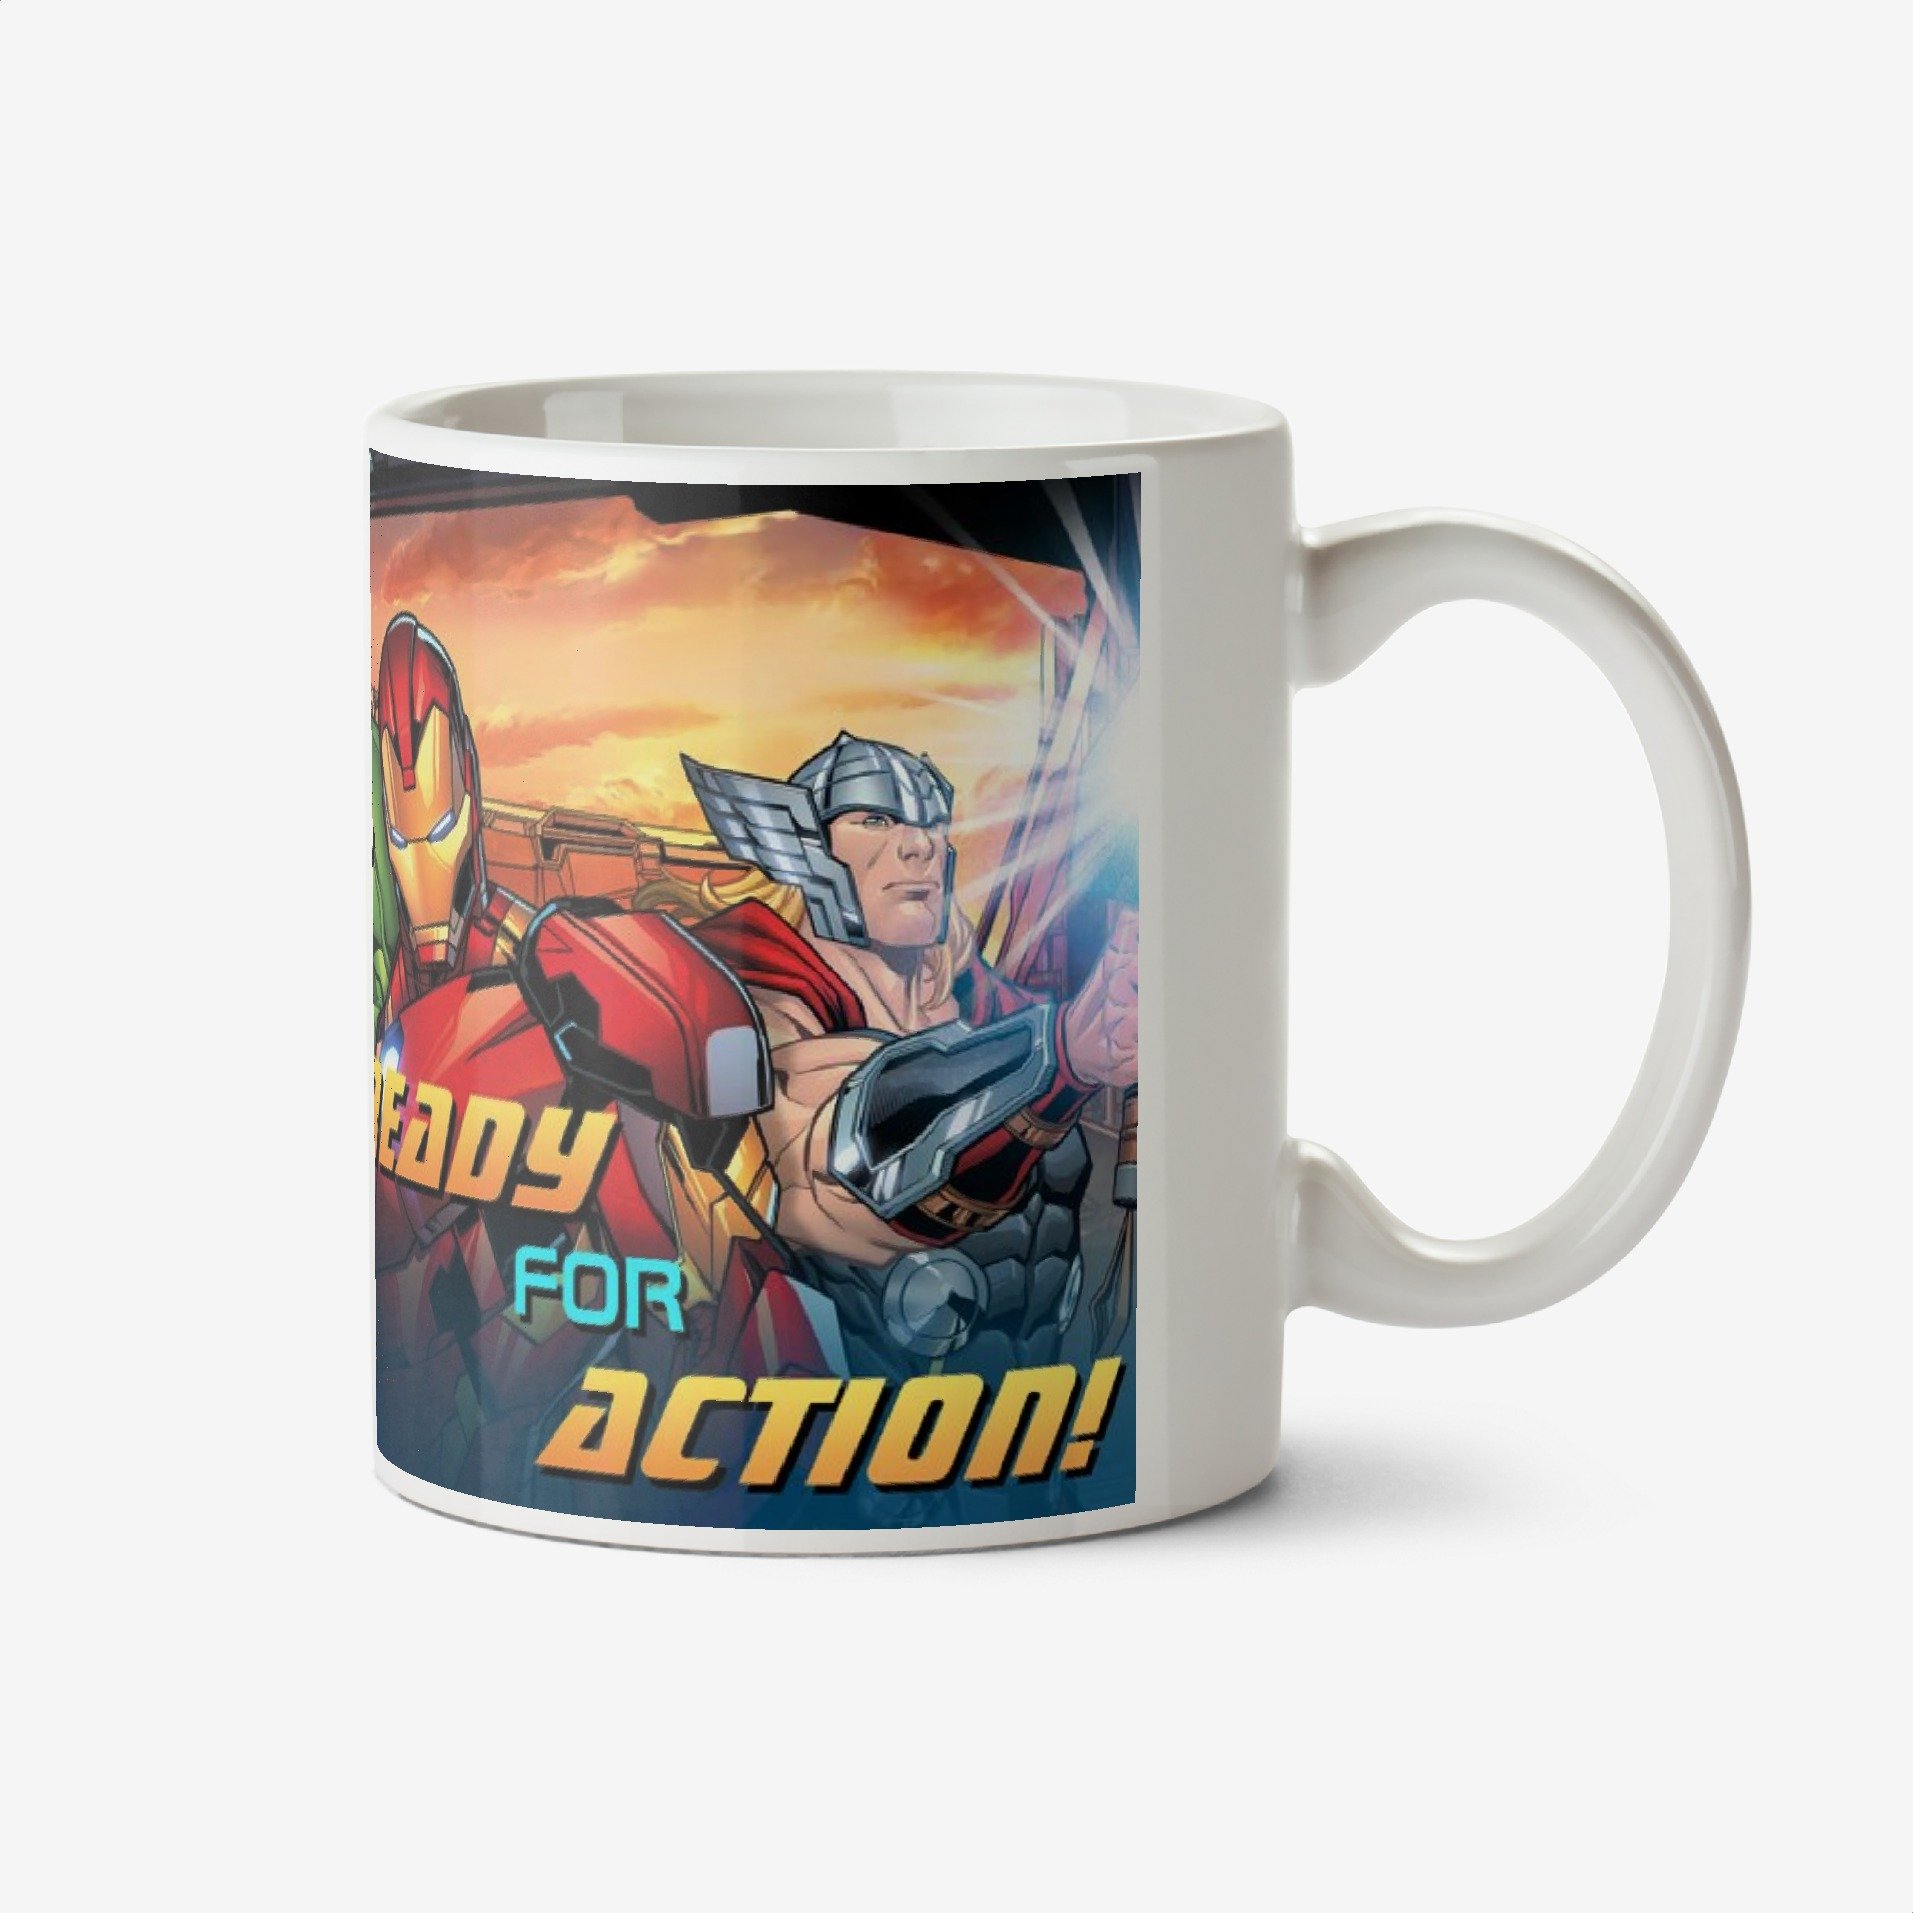 Marvel Action Heroes Mug Ceramic Mug